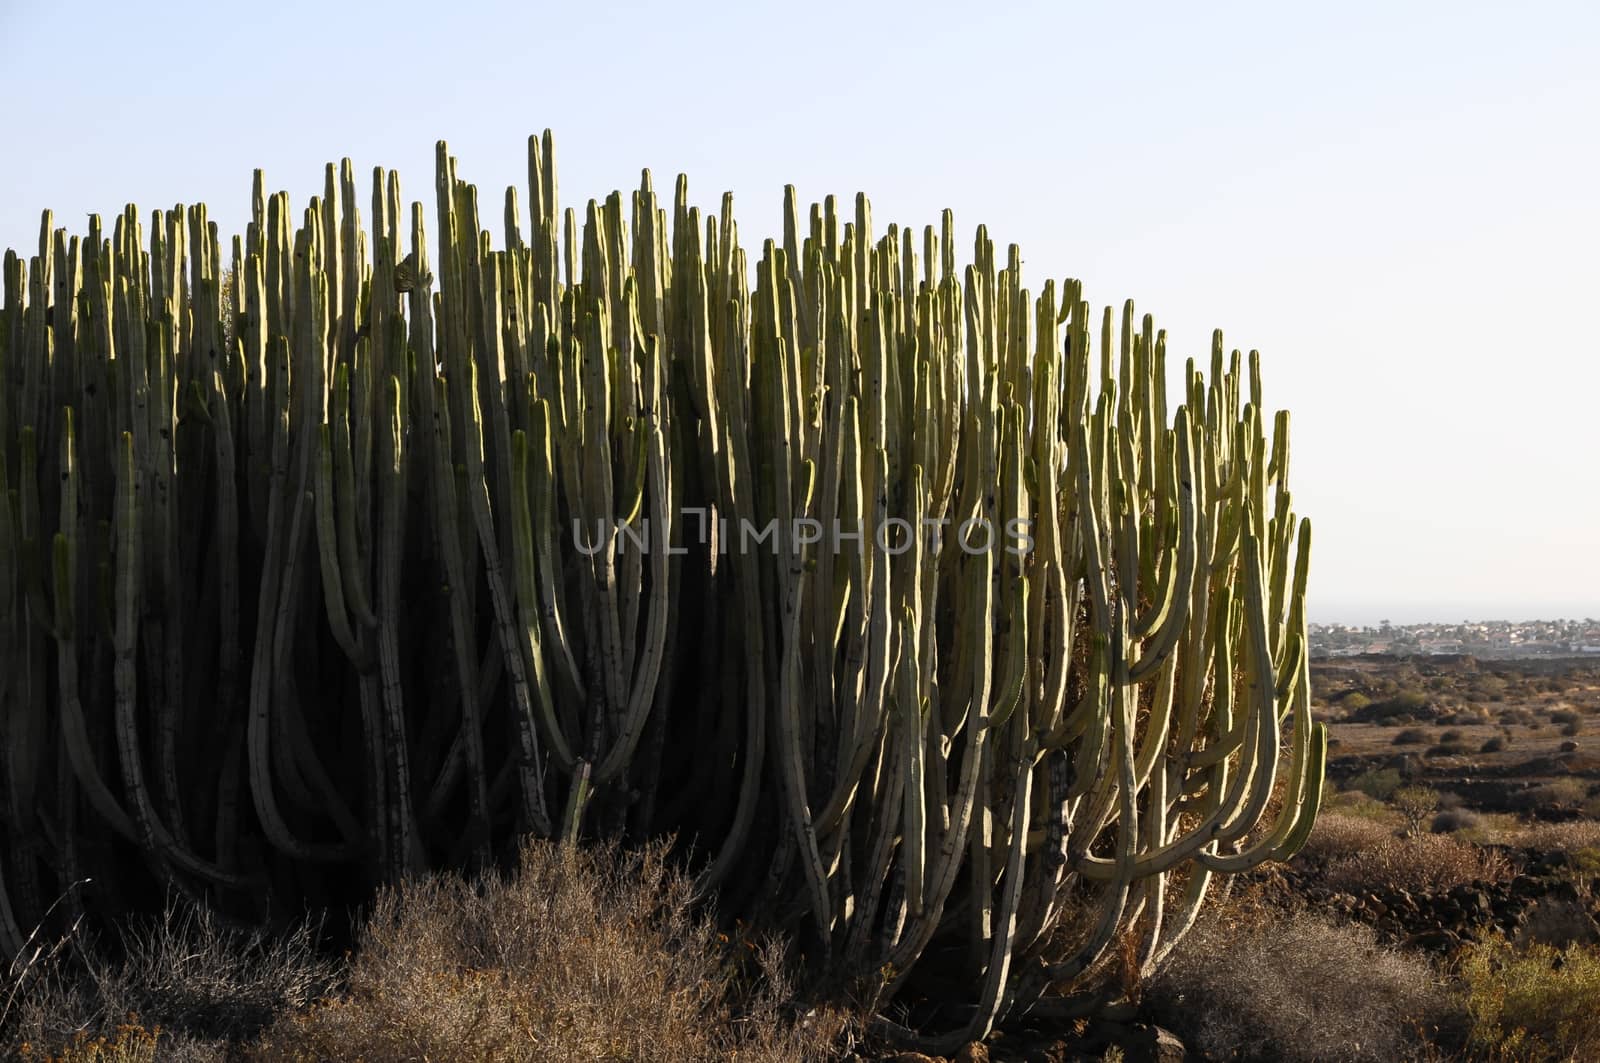 Green Big Cactus in the Desert by underworld